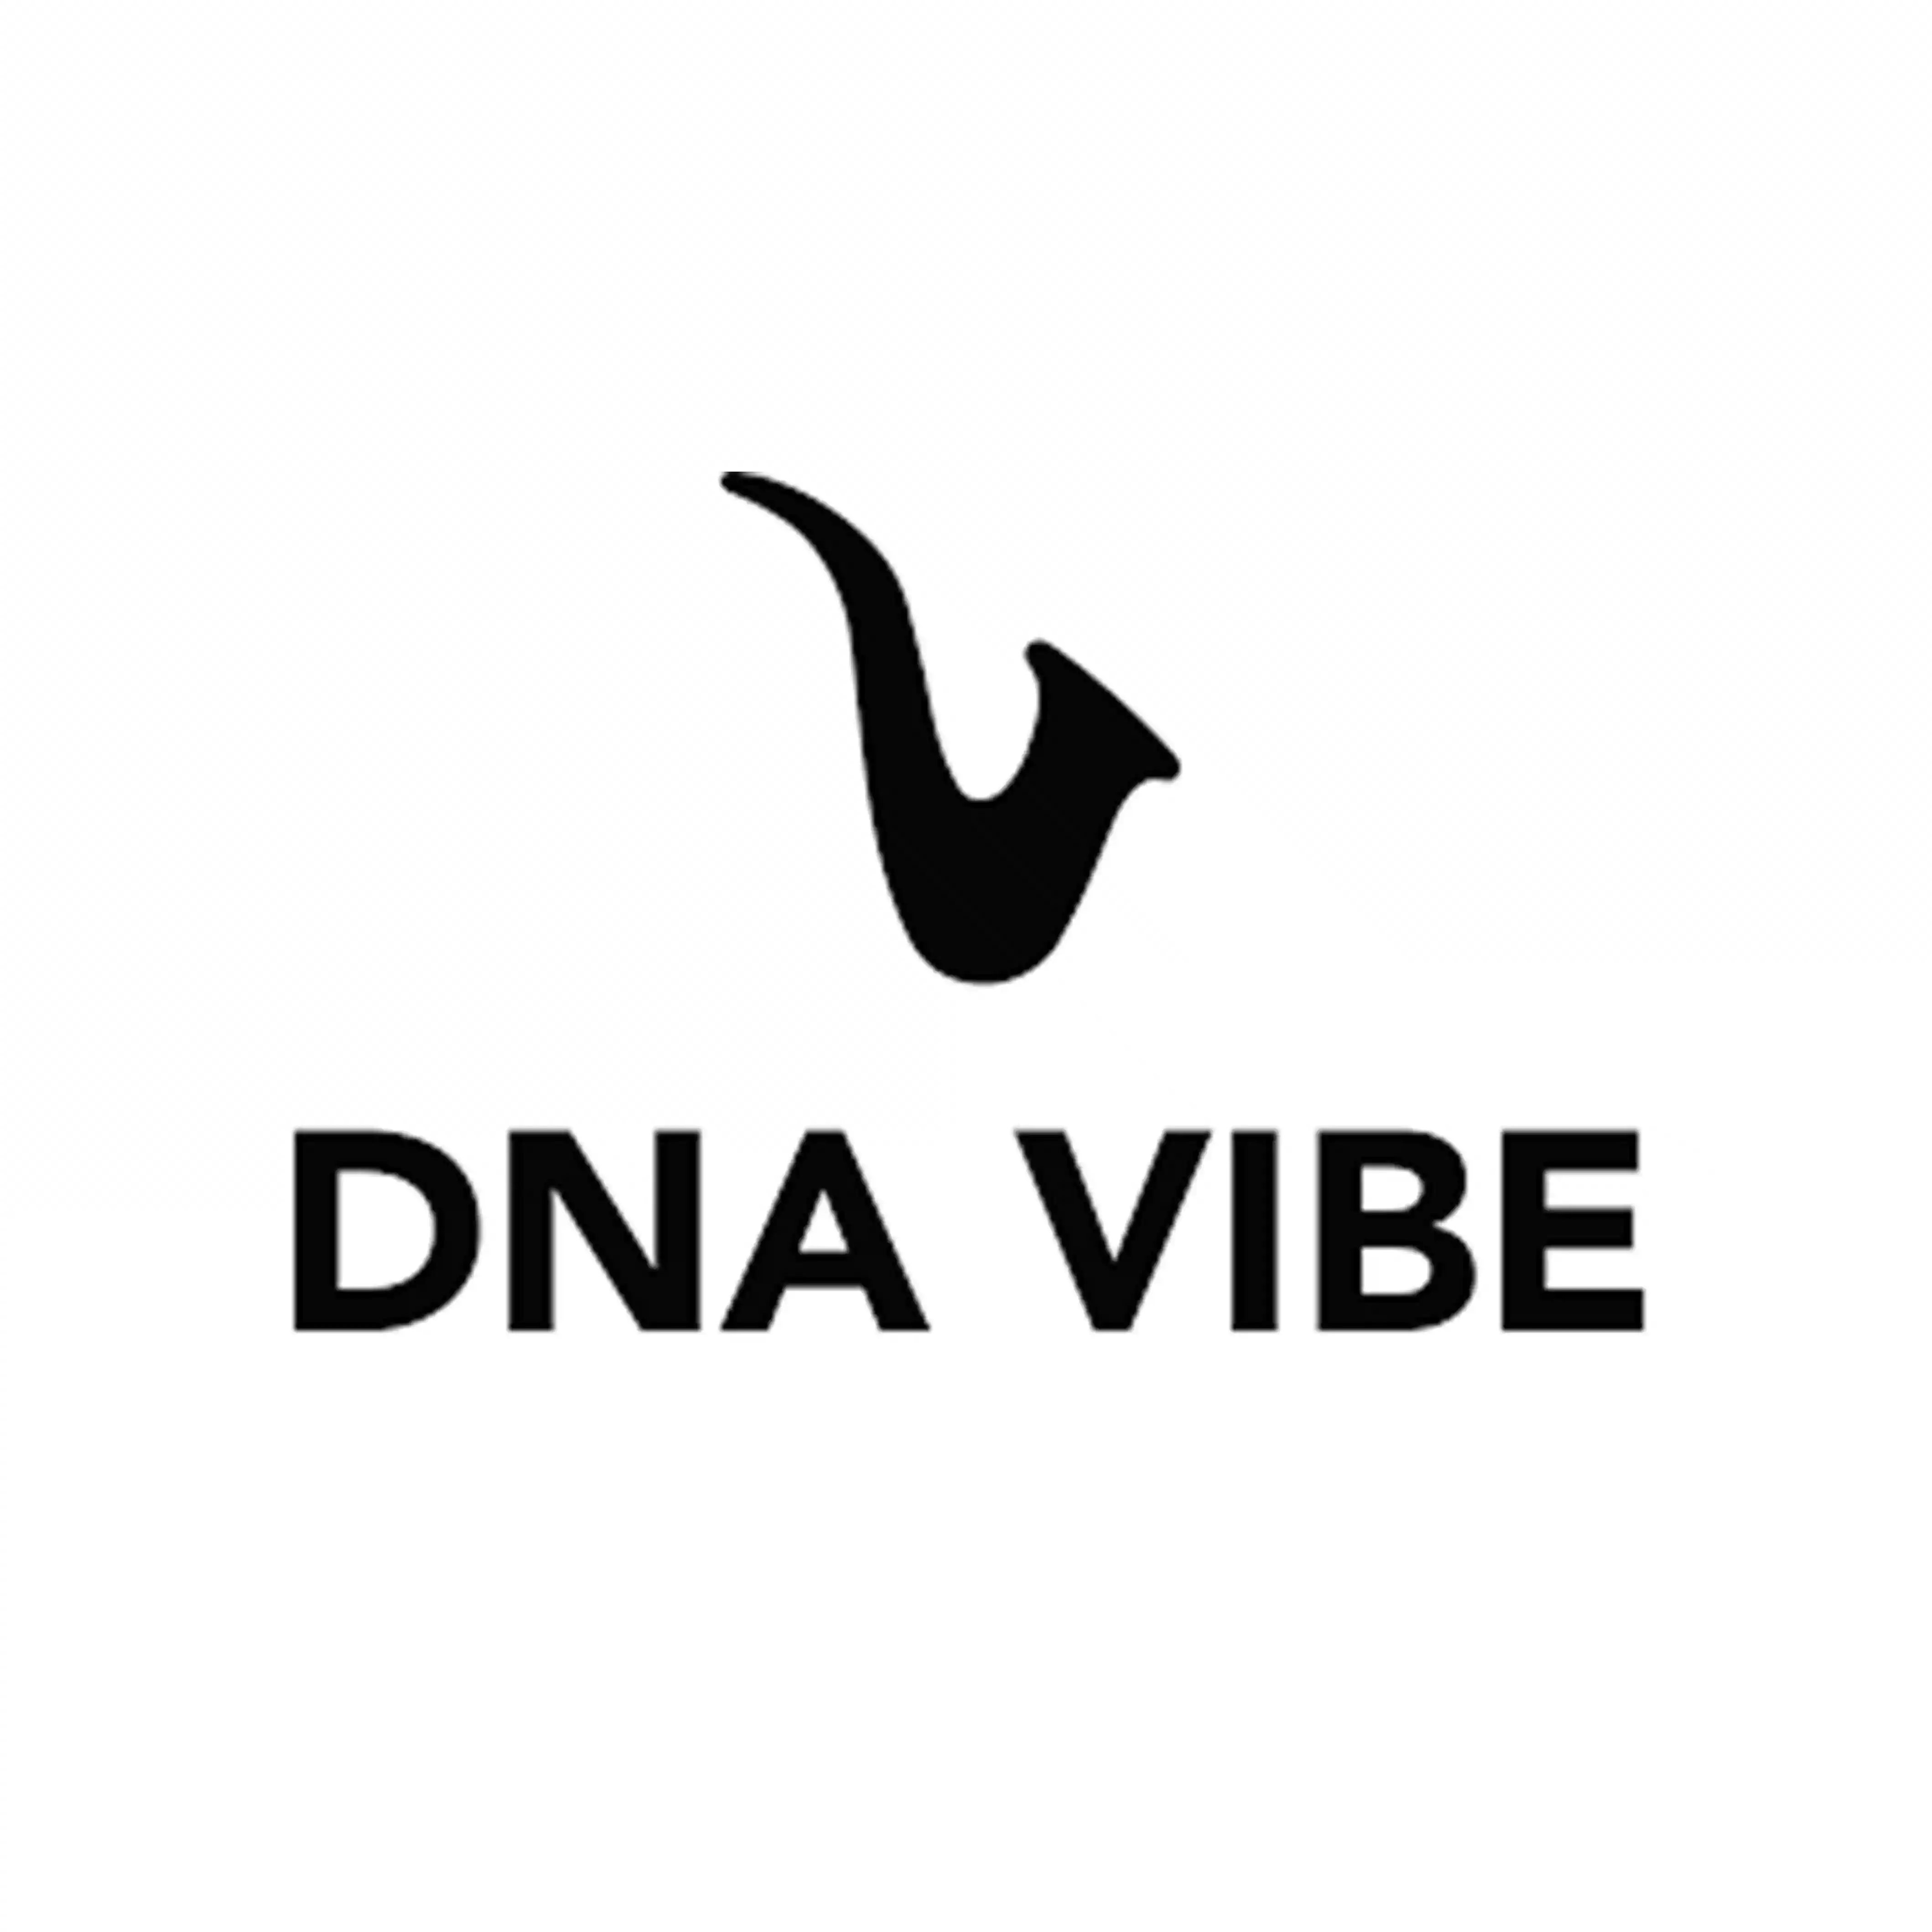 DNA Vibe logo